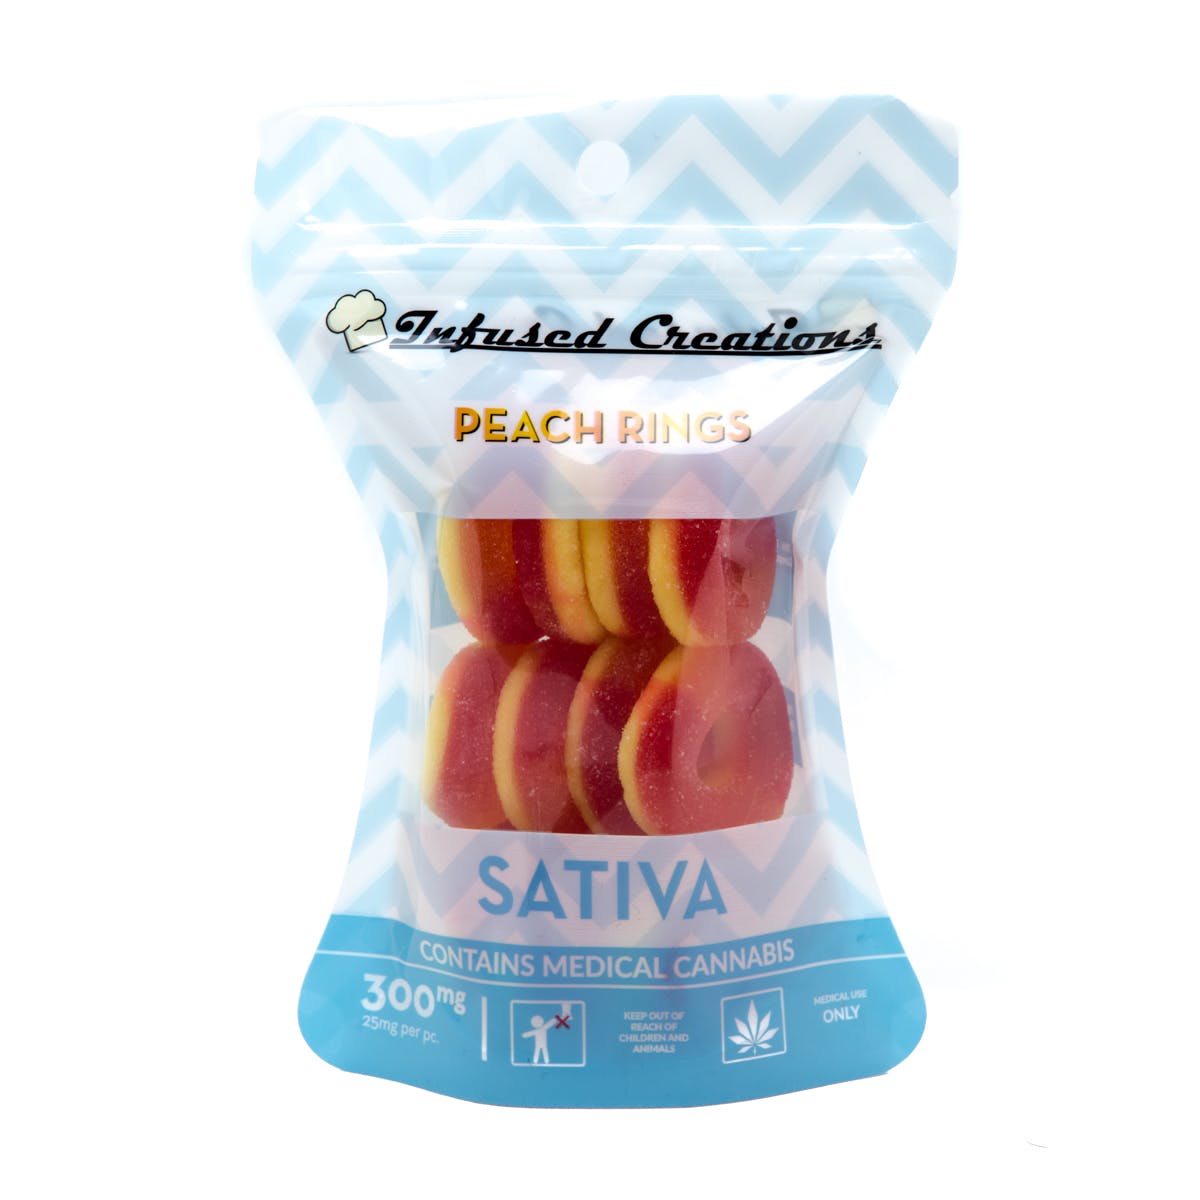 Peach Rings Sativa, 300mg